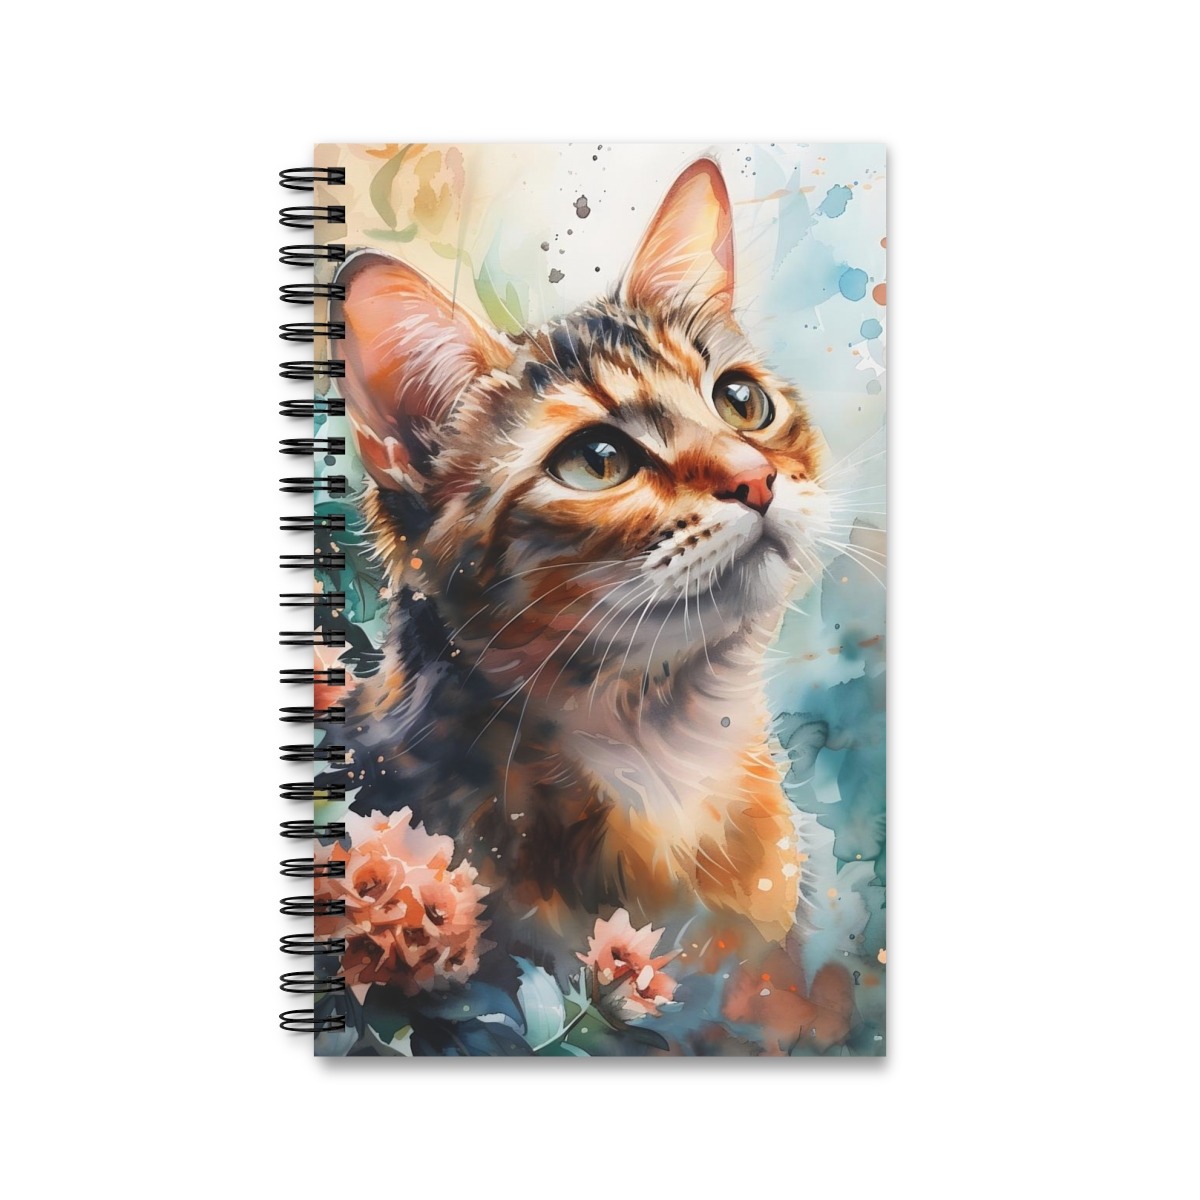 Aquarell Notizbuch mit süßem Katzenmotiv - Ringbindung in 4 Varianten